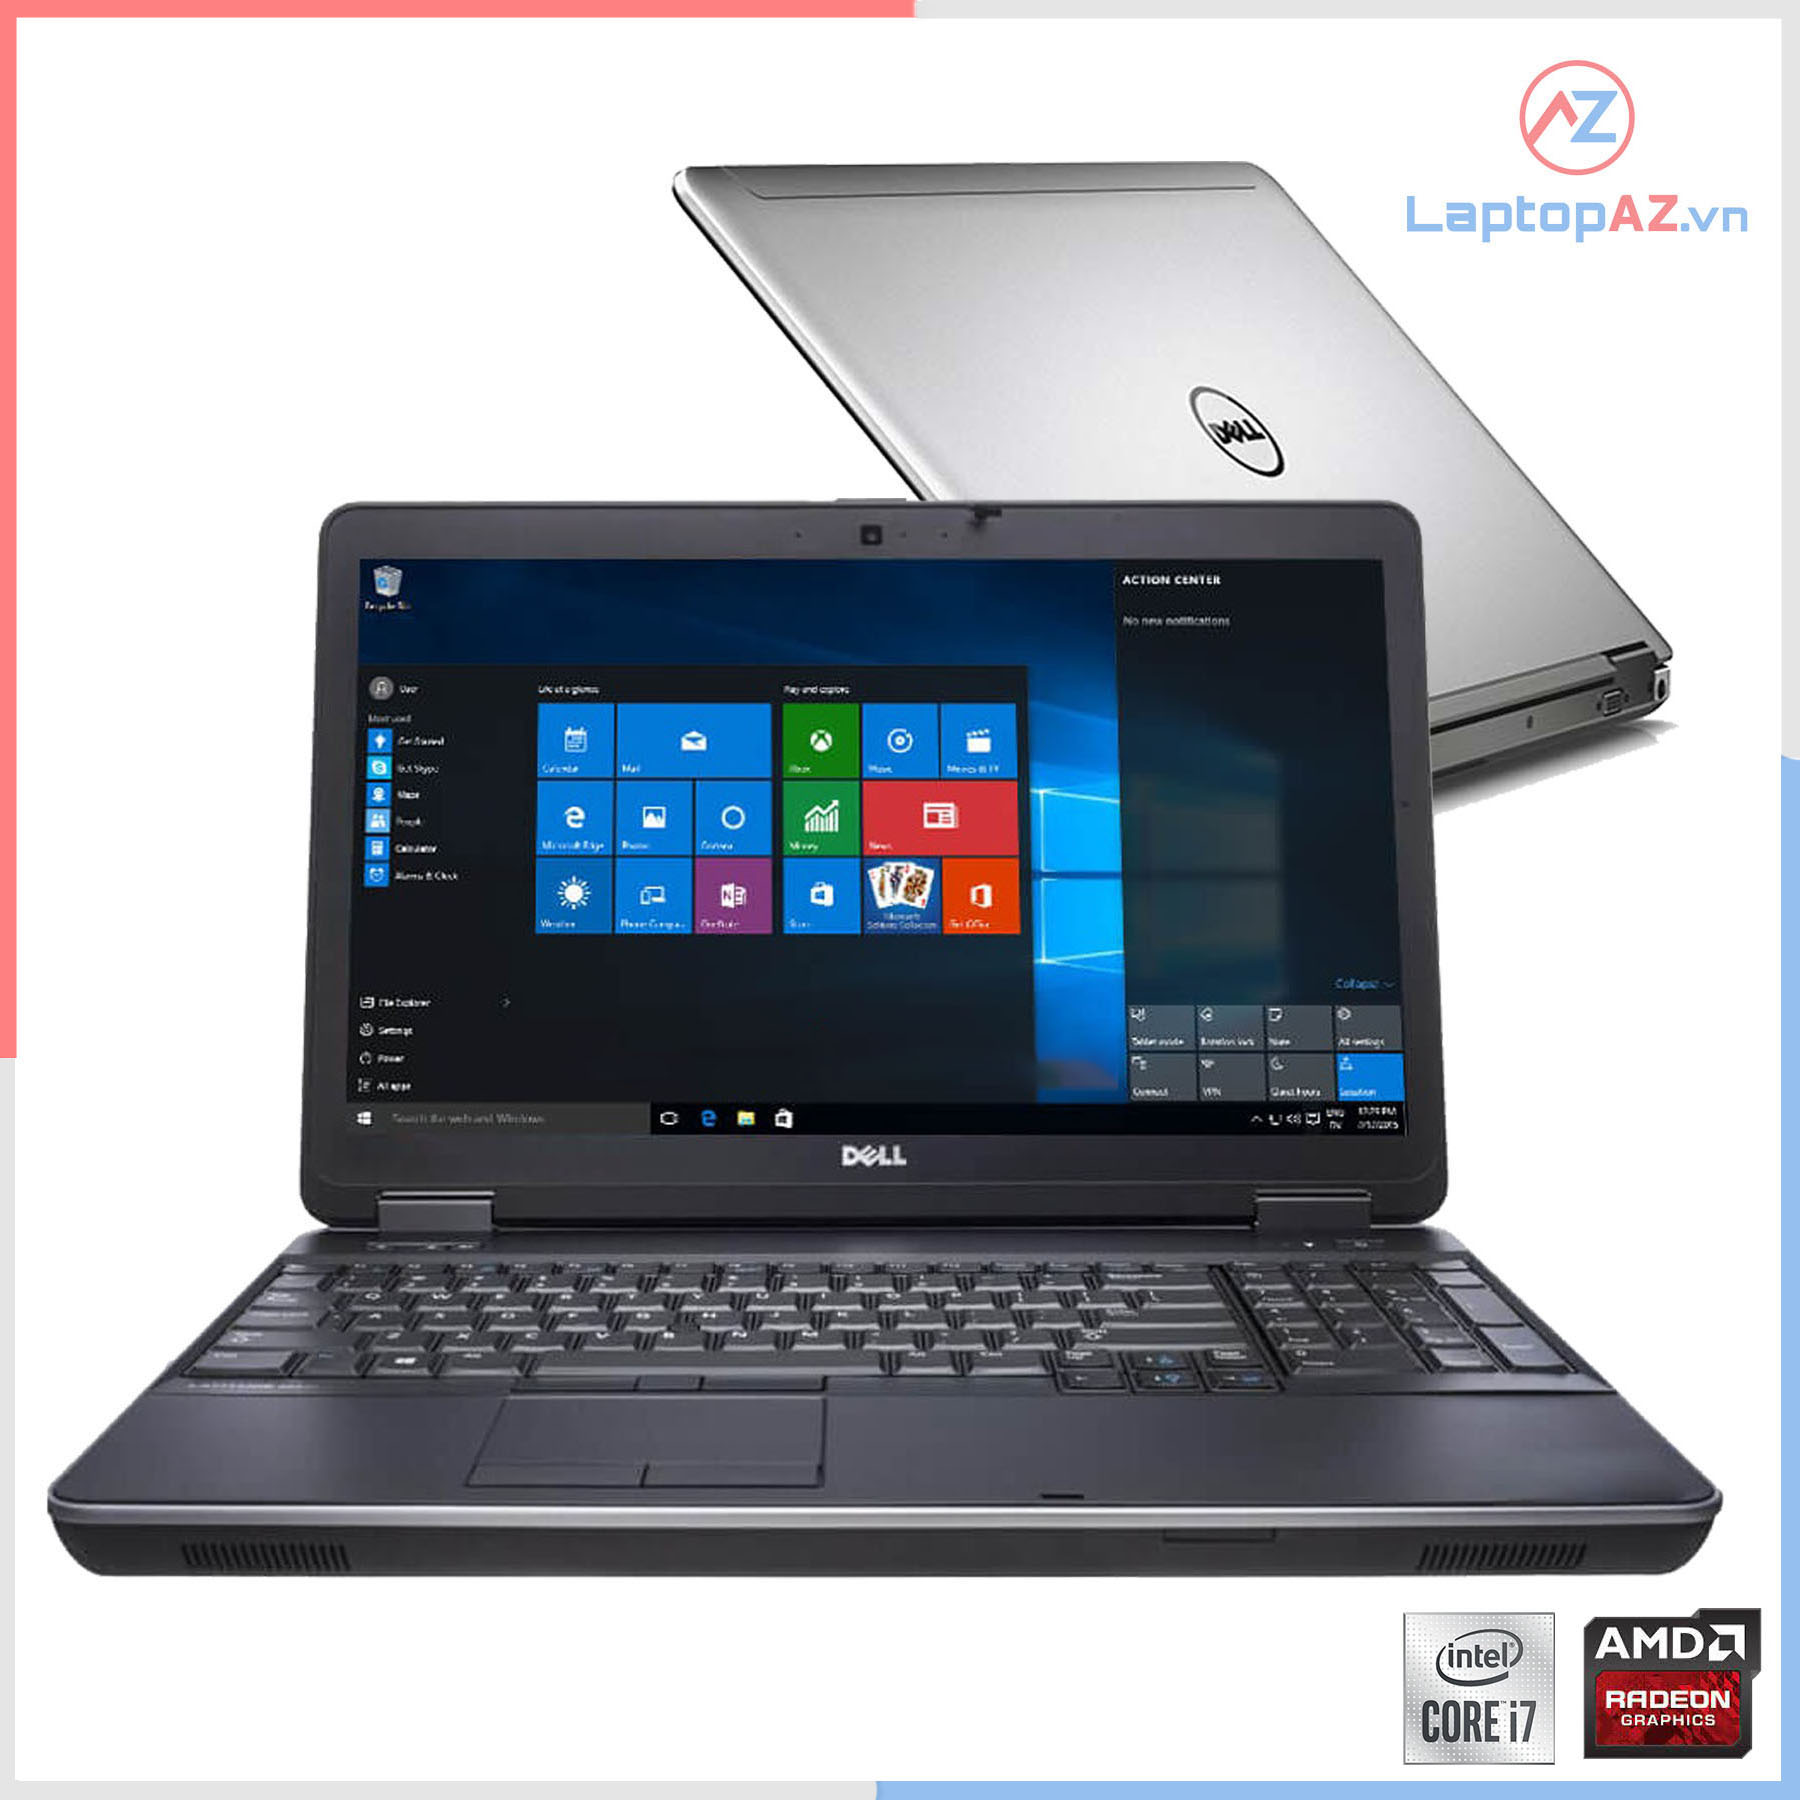 Laptop Dell Latitude E6540 (Core i7 4800MQ, 8GB, 256GB, VGA 2GB AMD Radeon HD 8790M, 15.6 FHD IPS)